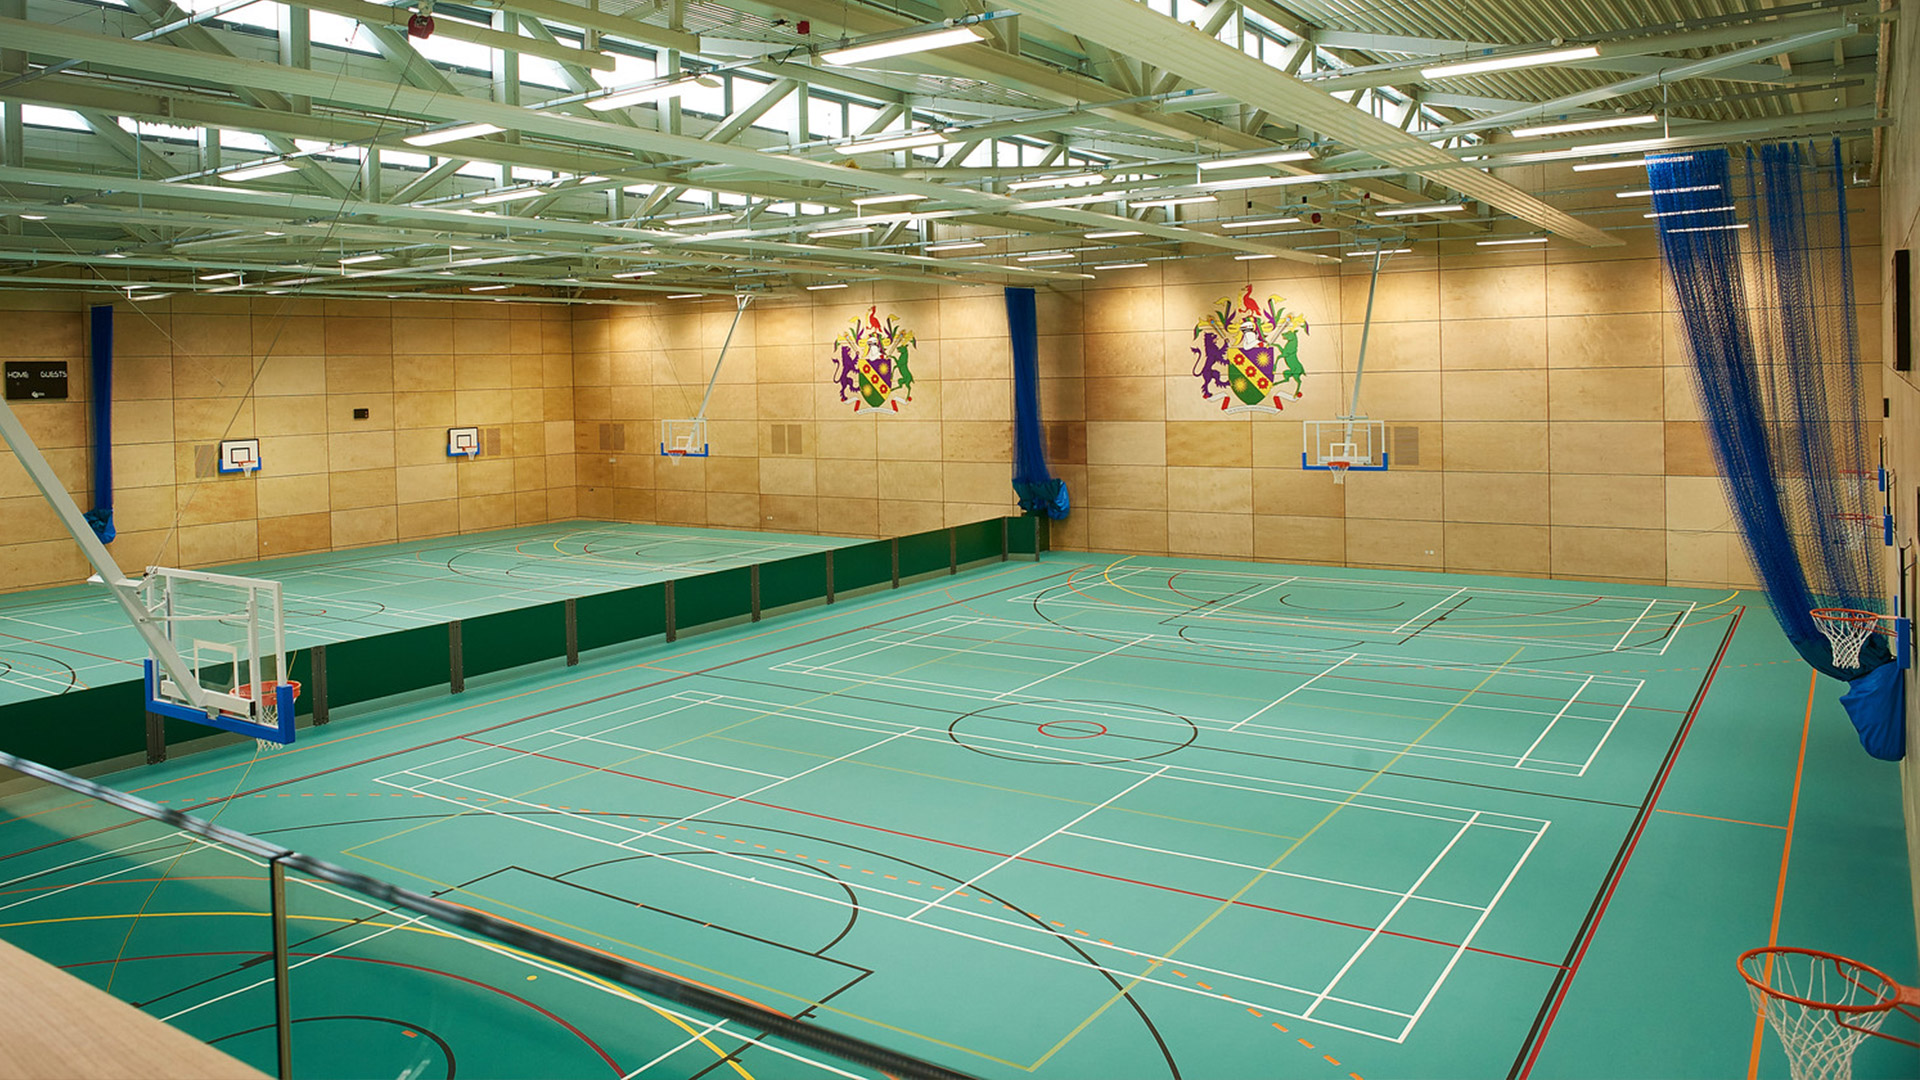 The indoor sports court